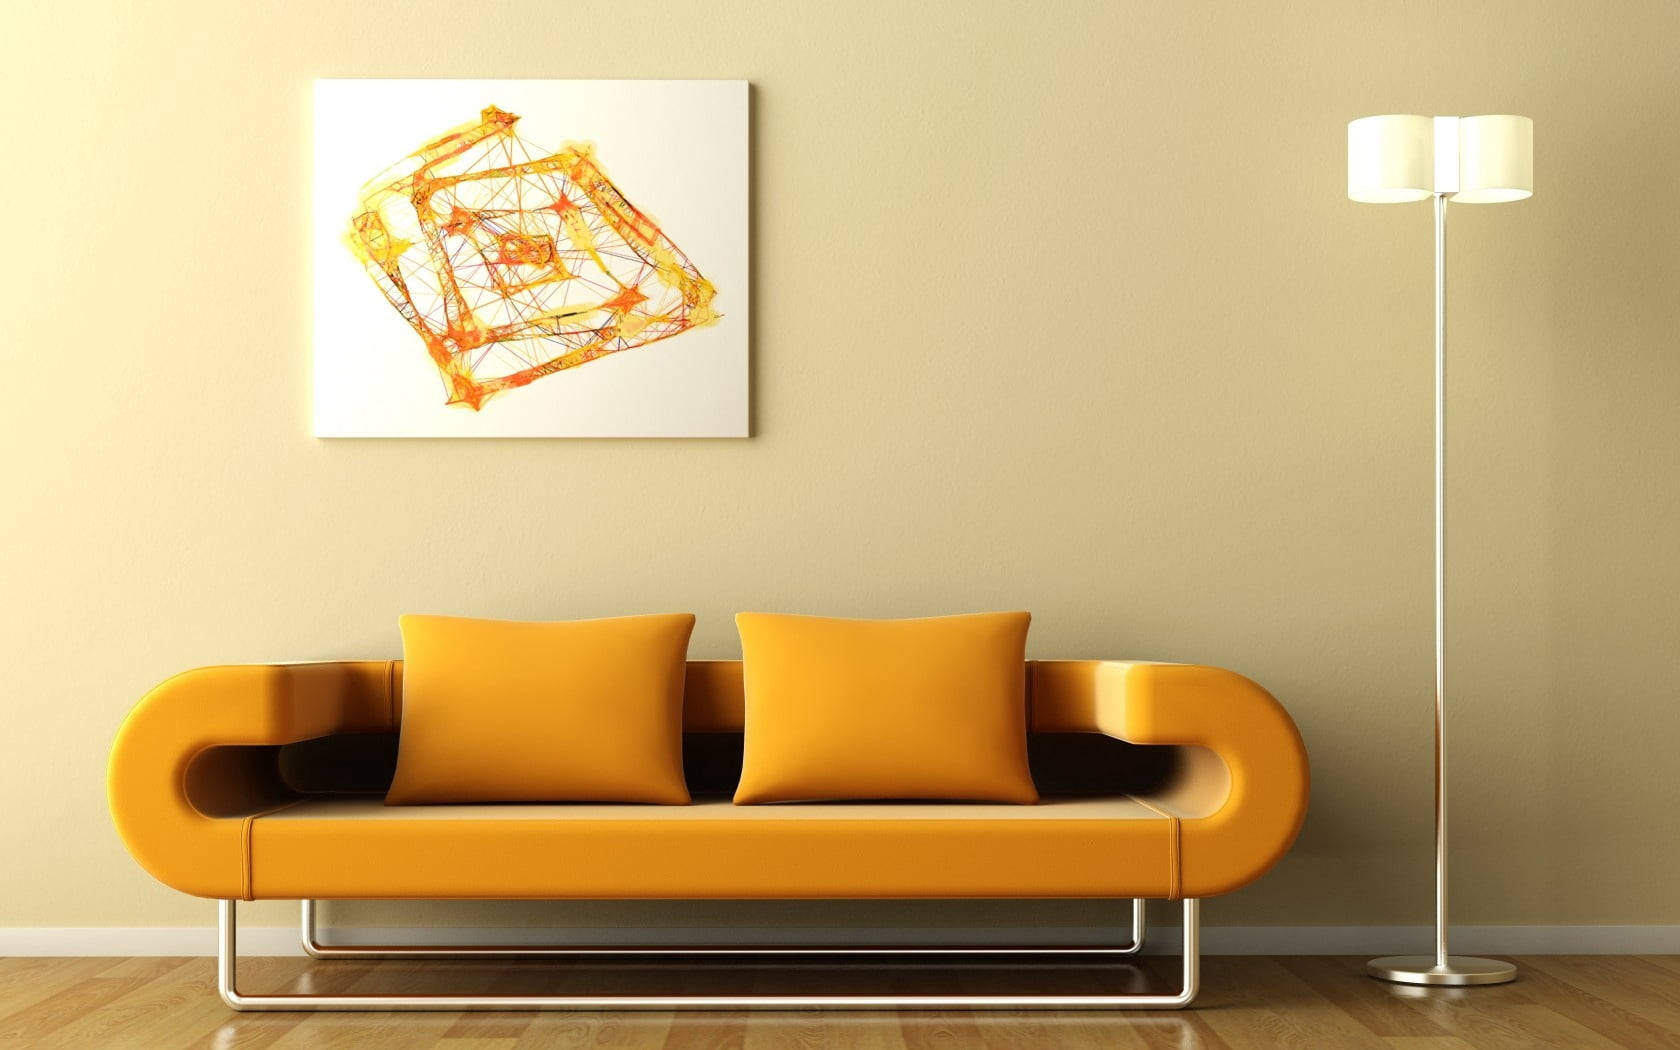 Elegant Aesthetic Abode - A Cozy Corner Encapsulating Simplicity, Elegance, And Warmth.